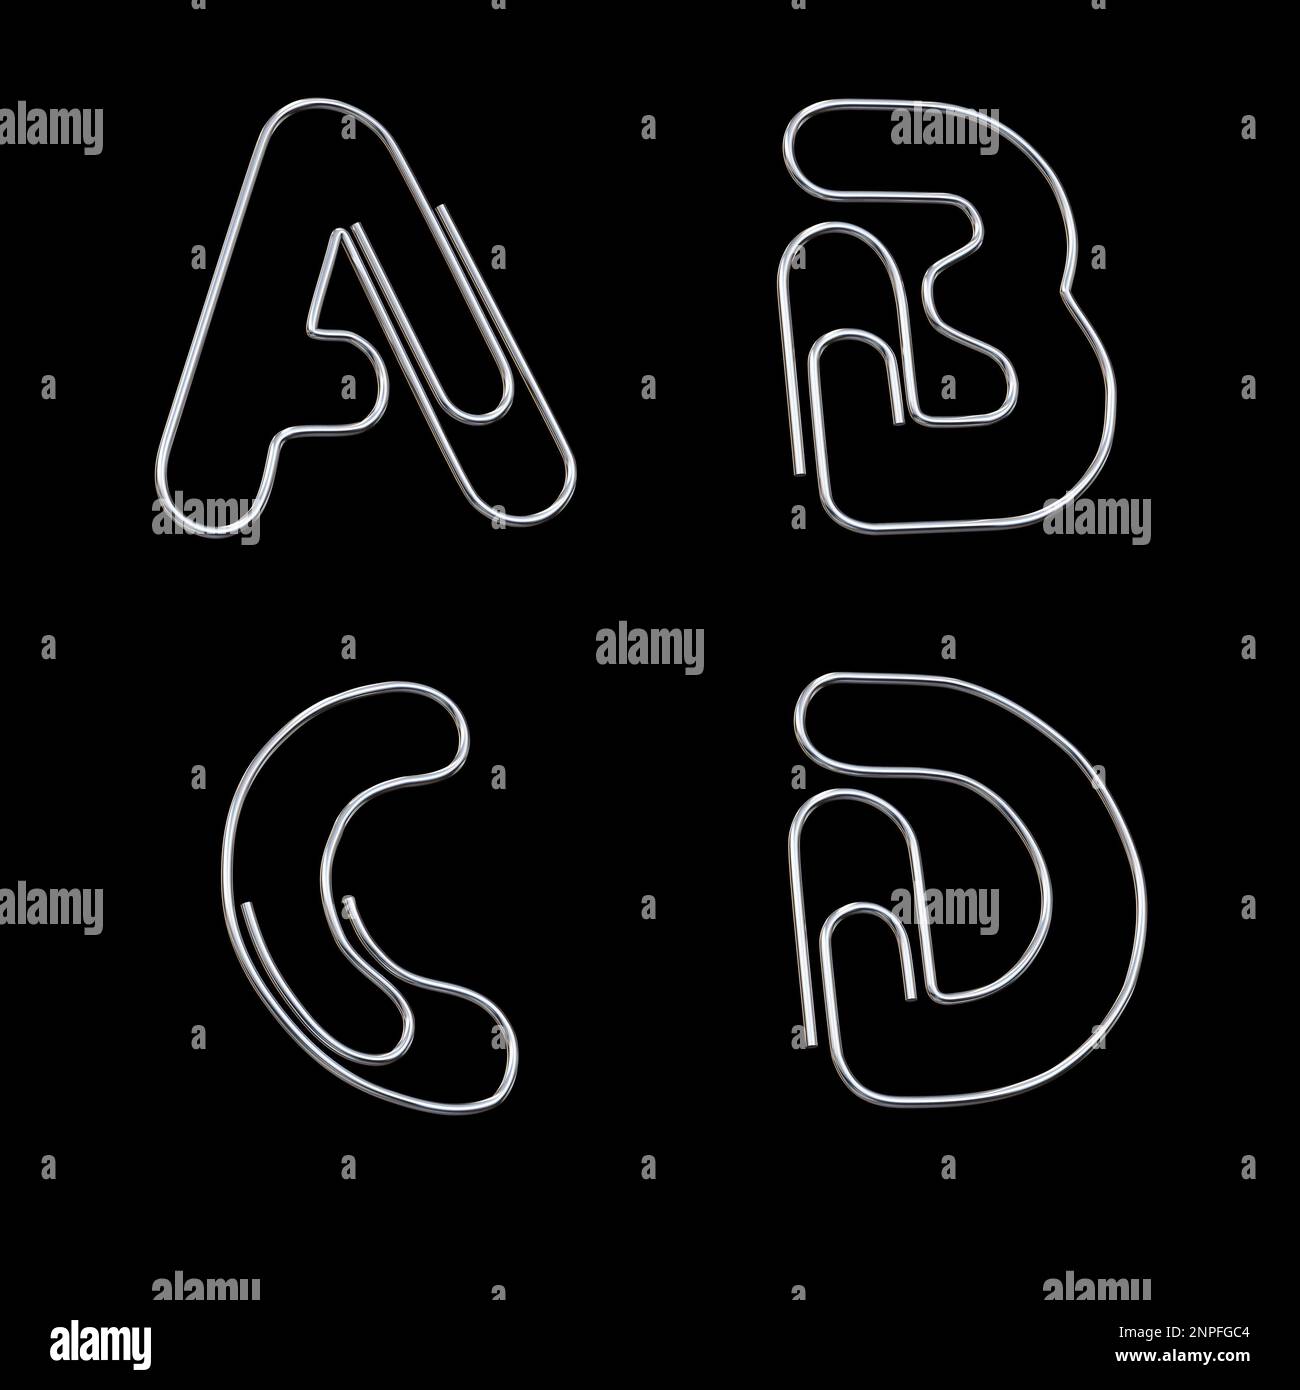 3d rendering of metal paper clip alphabet - letters A-D Stock Photo